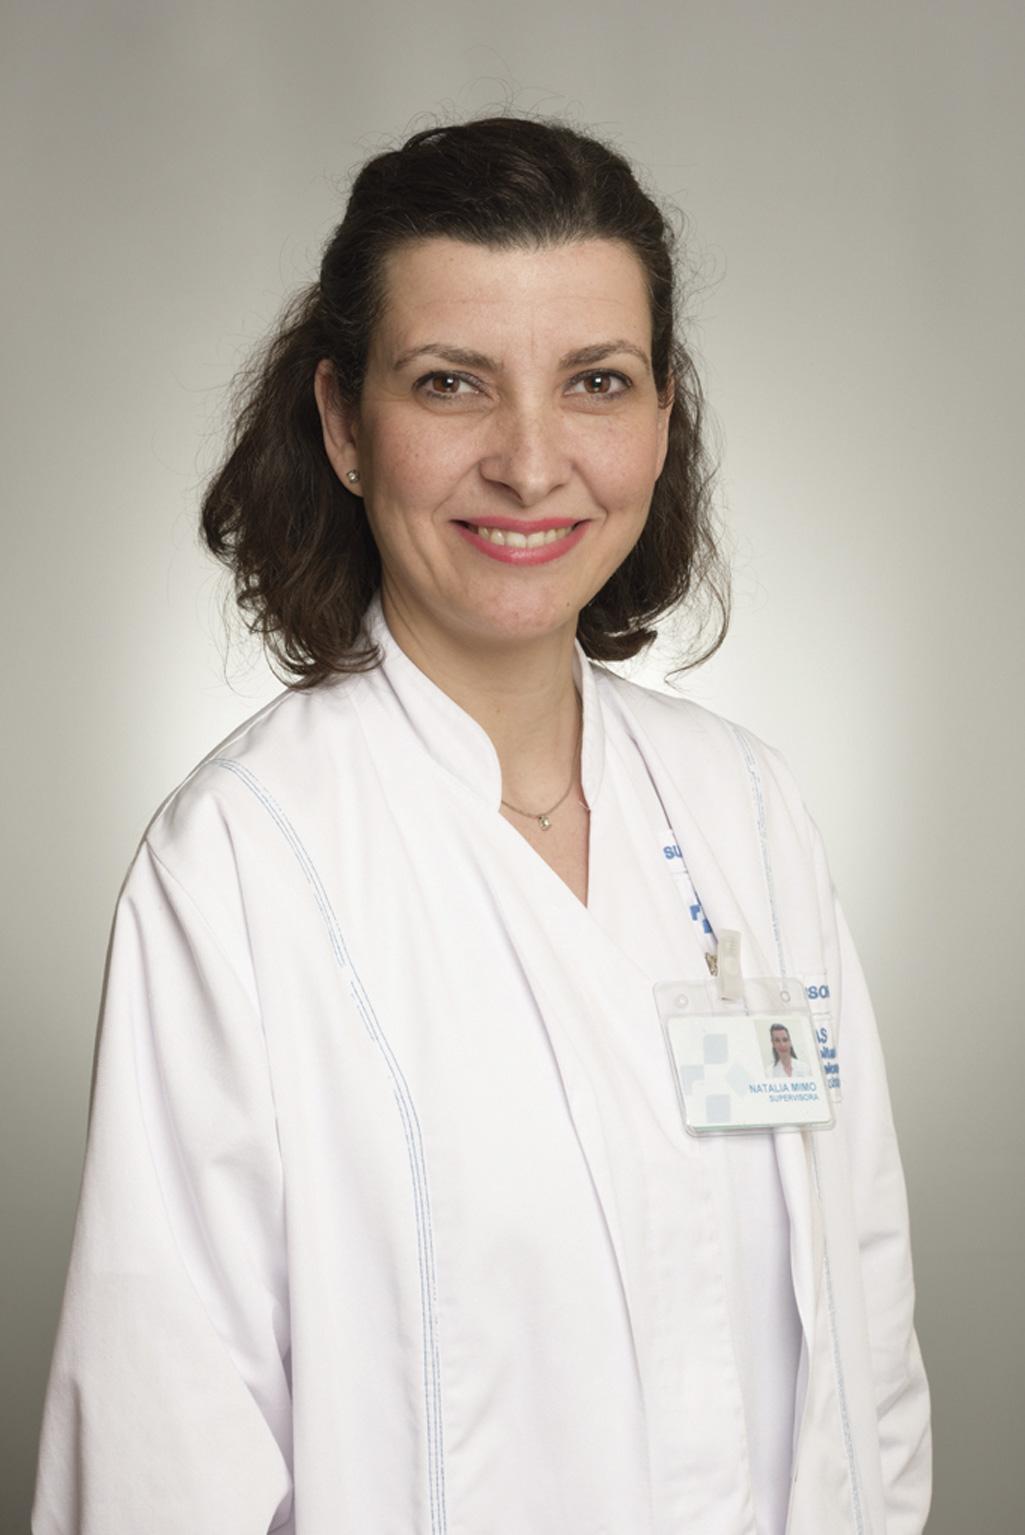 Natàlia Mimó, supervisora de enfermería de la unidad medicoquirúrgica del Hospital de Barcelona